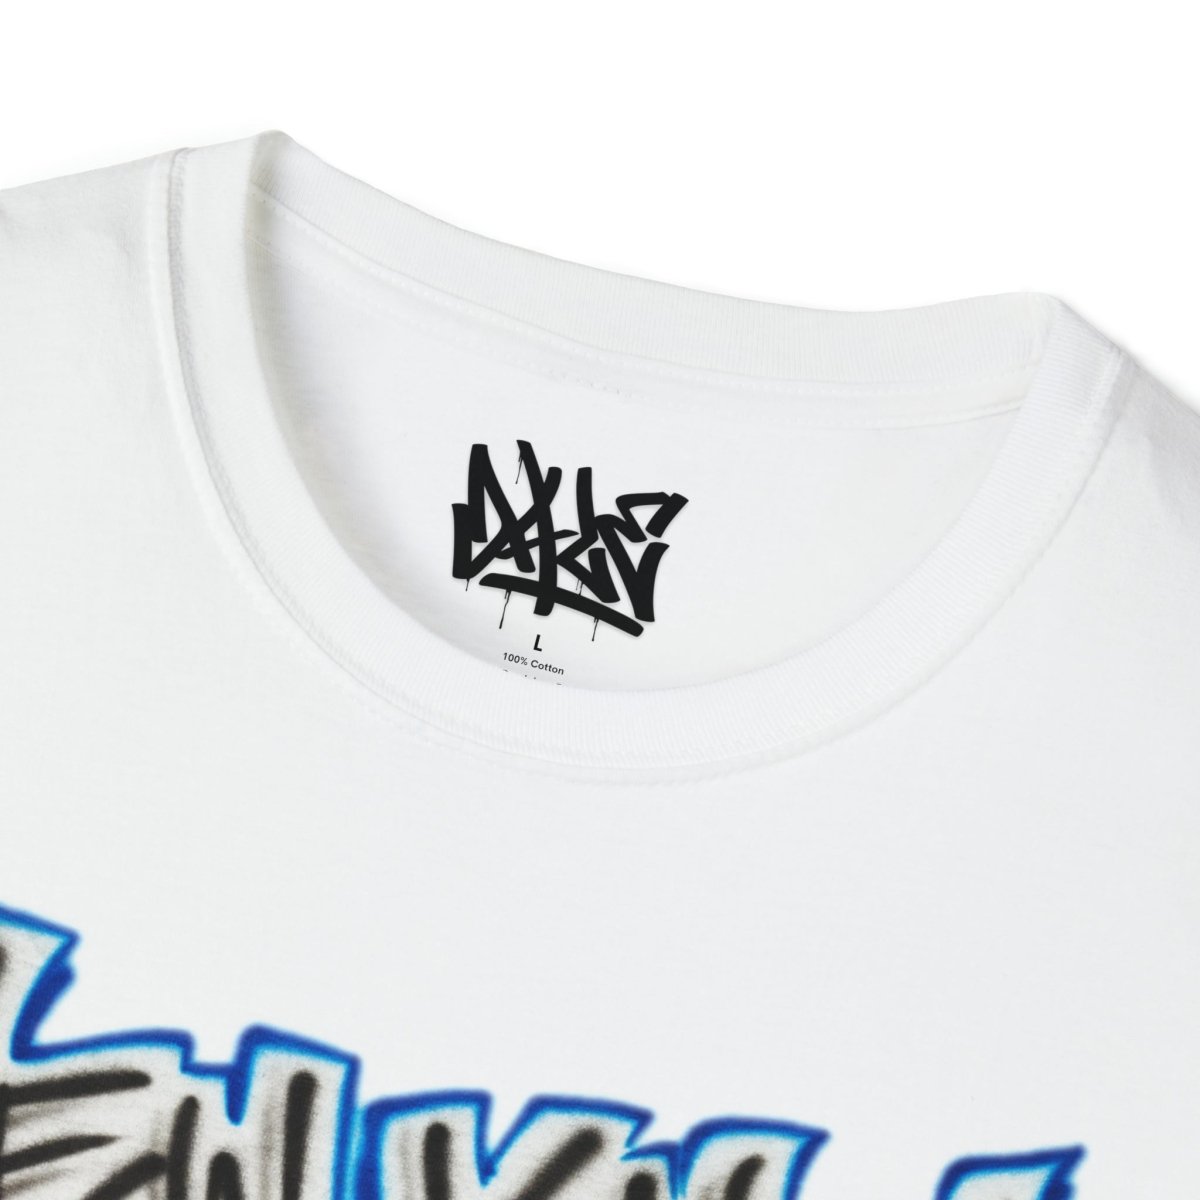 NY Knicks Graffiti T shirt Customizable Airbrush T shirt Design from Airbrush Customs x Dale The Airbrush Guy